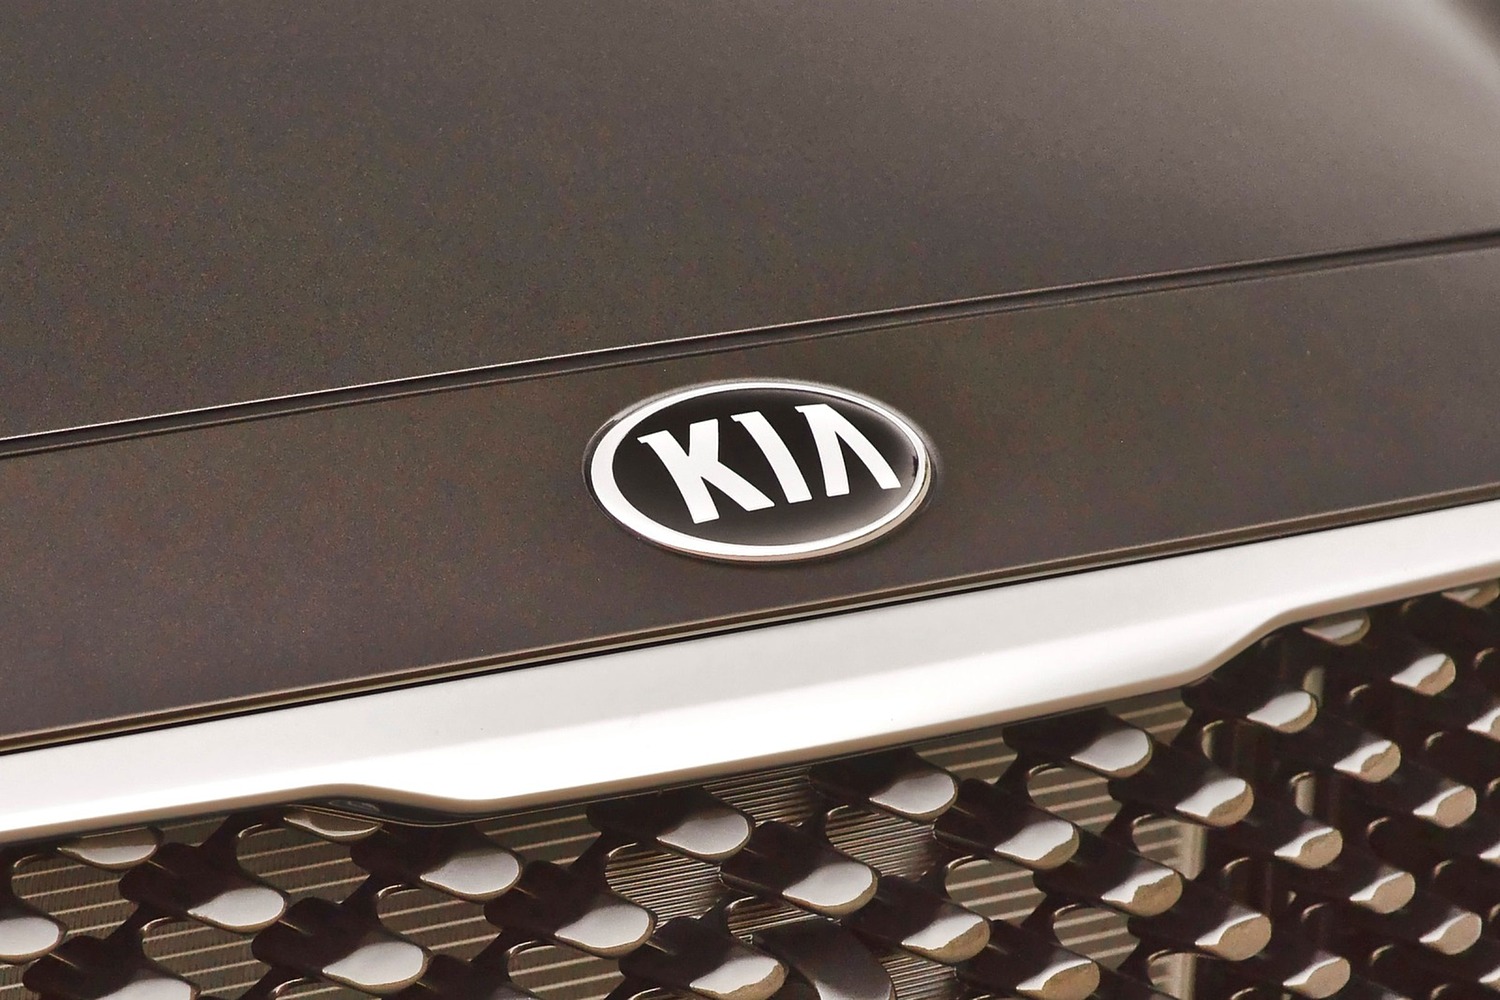 Kia Sedona SX Limited Passenger Minivan Front Badge (2016 model year shown)